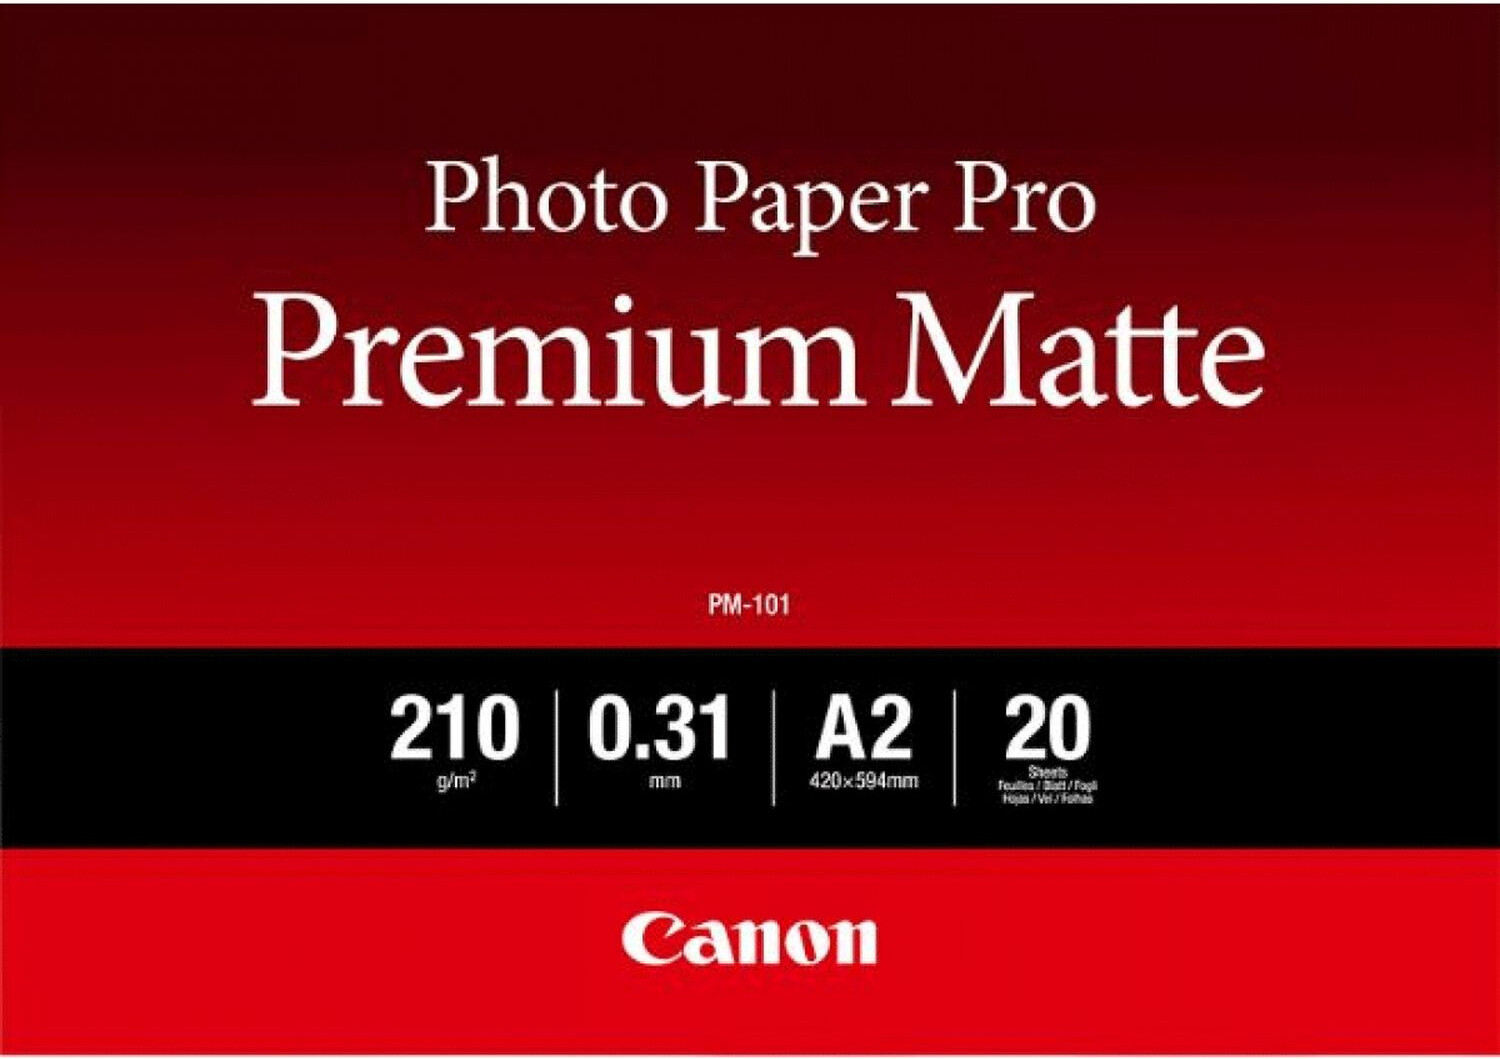 Canon PM-101 Photo Paper Pro Premium Matte A2, 20 Sheets - on order